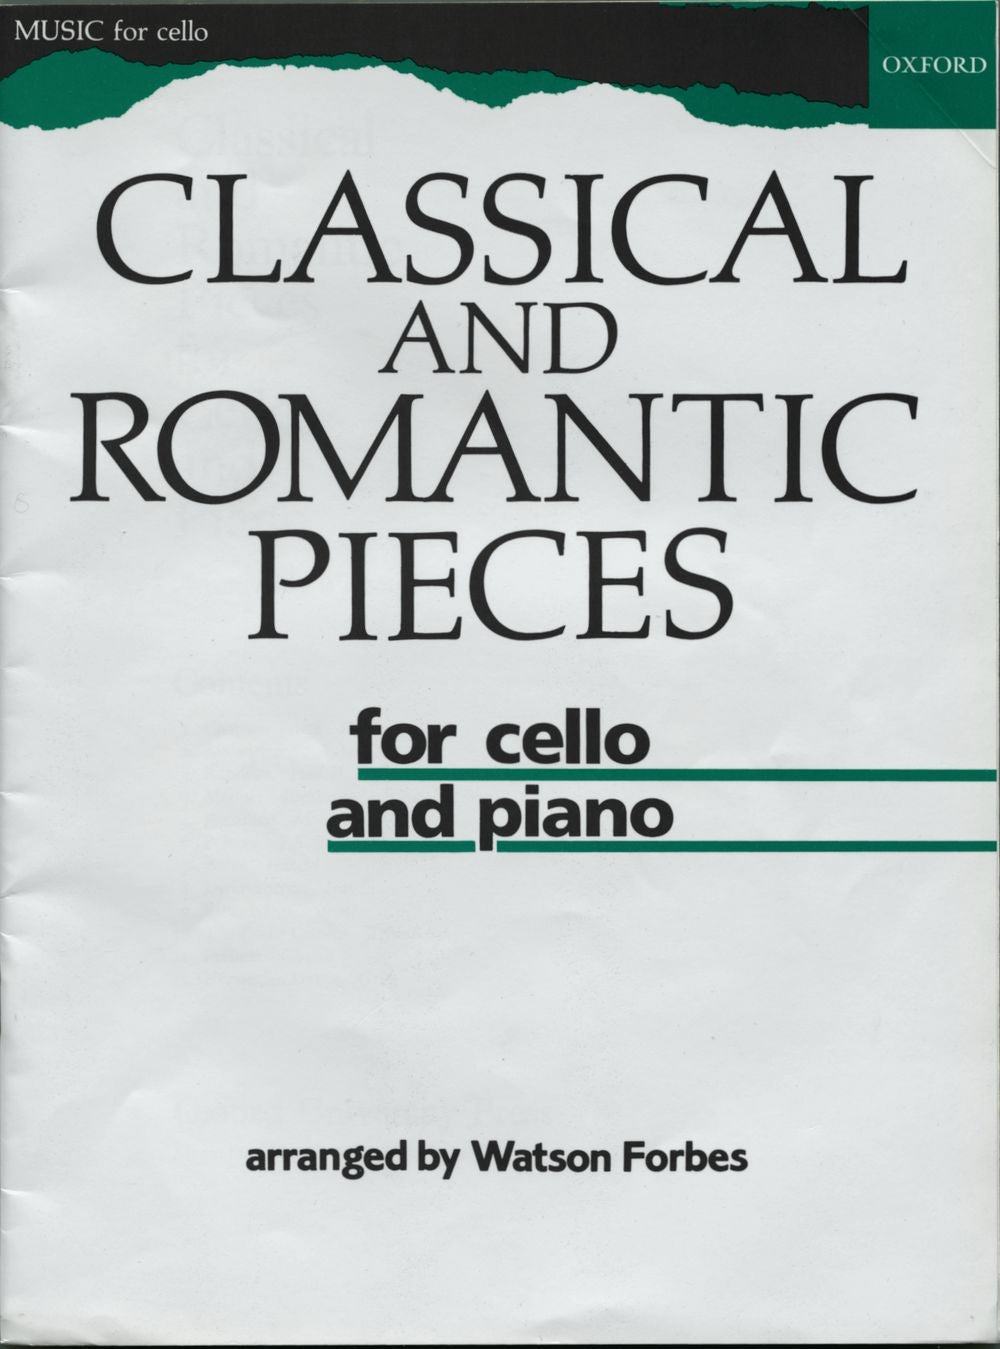 Classical & Romantic Cello bk 1 OUP